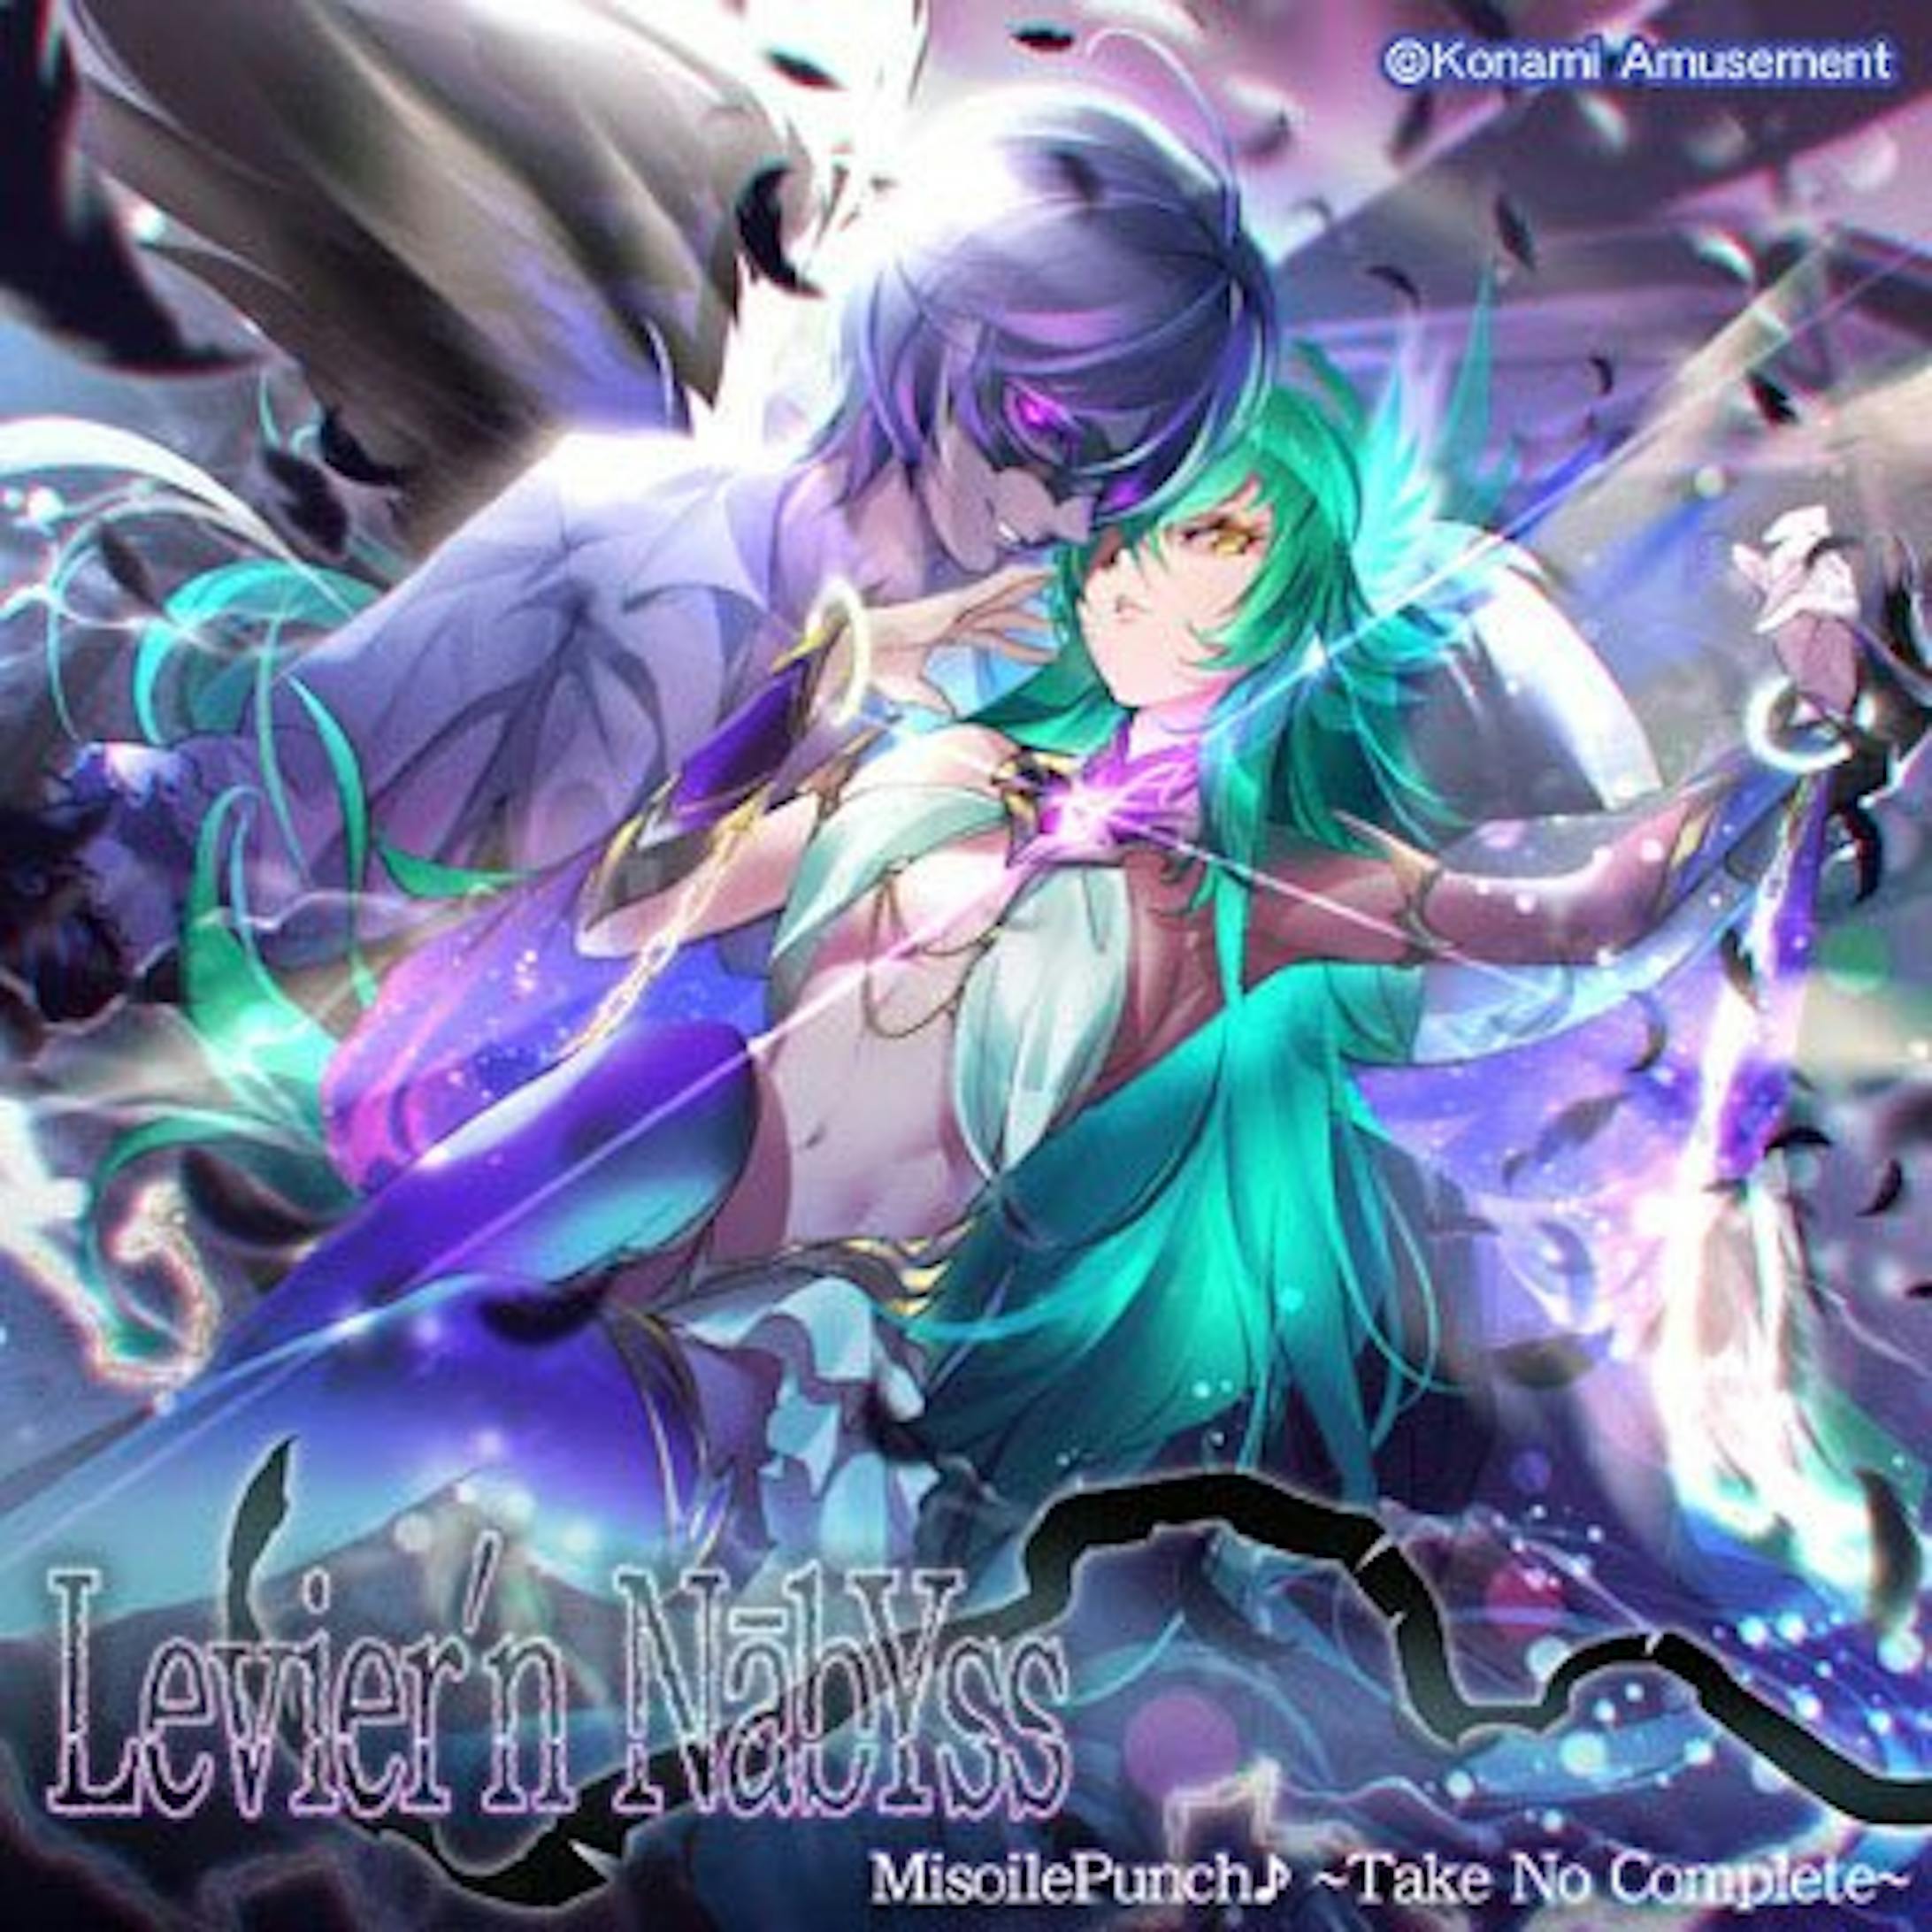 【SDVX】Levier'n NābYss / MisoilePunch♪〜Take No Complete〜-1